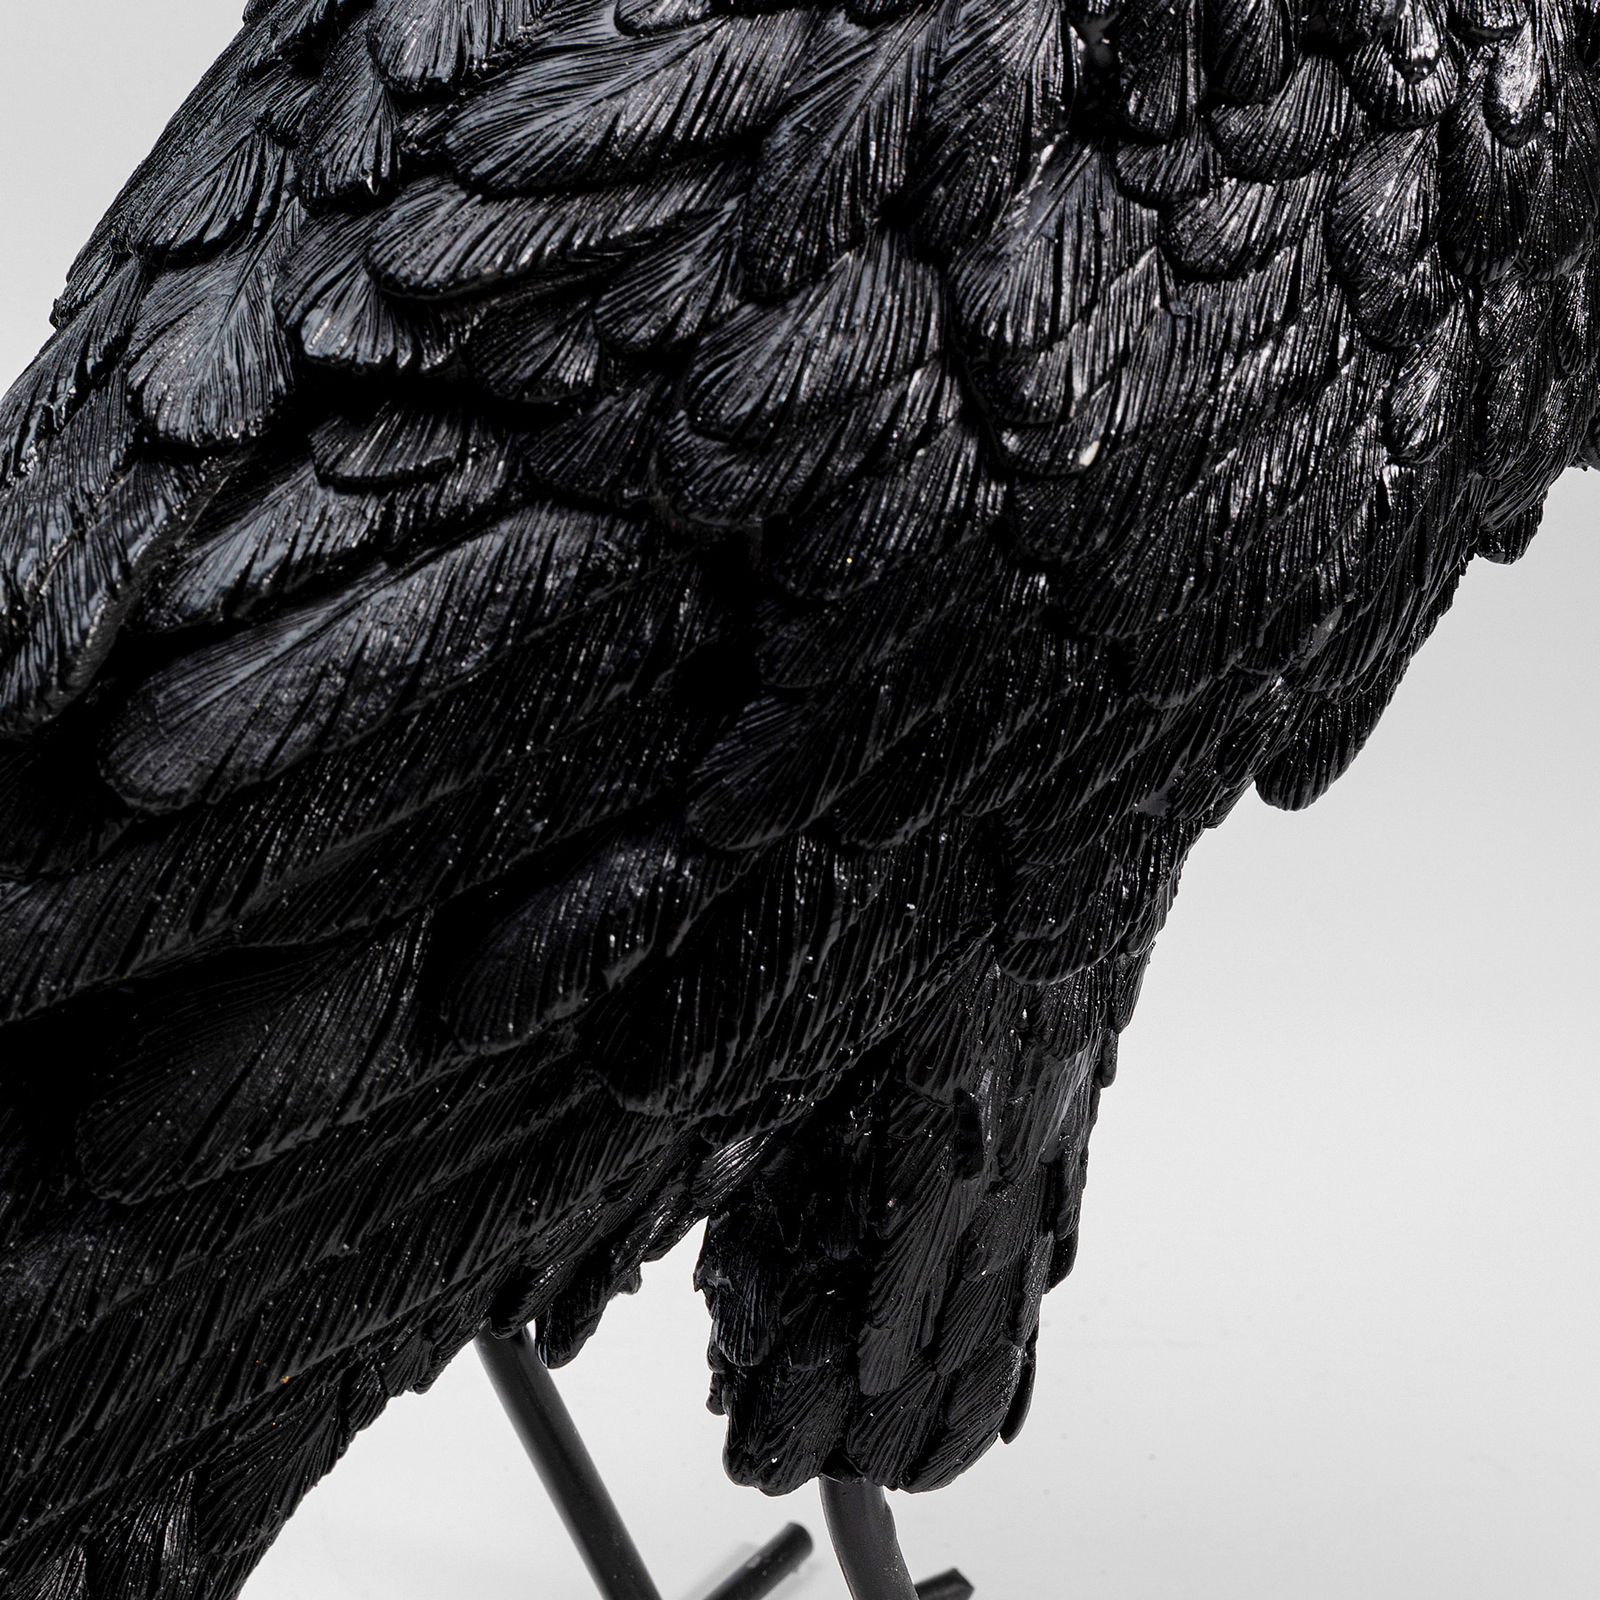 Candeeiro de mesa KAREN Animal Crow em forma de corvo